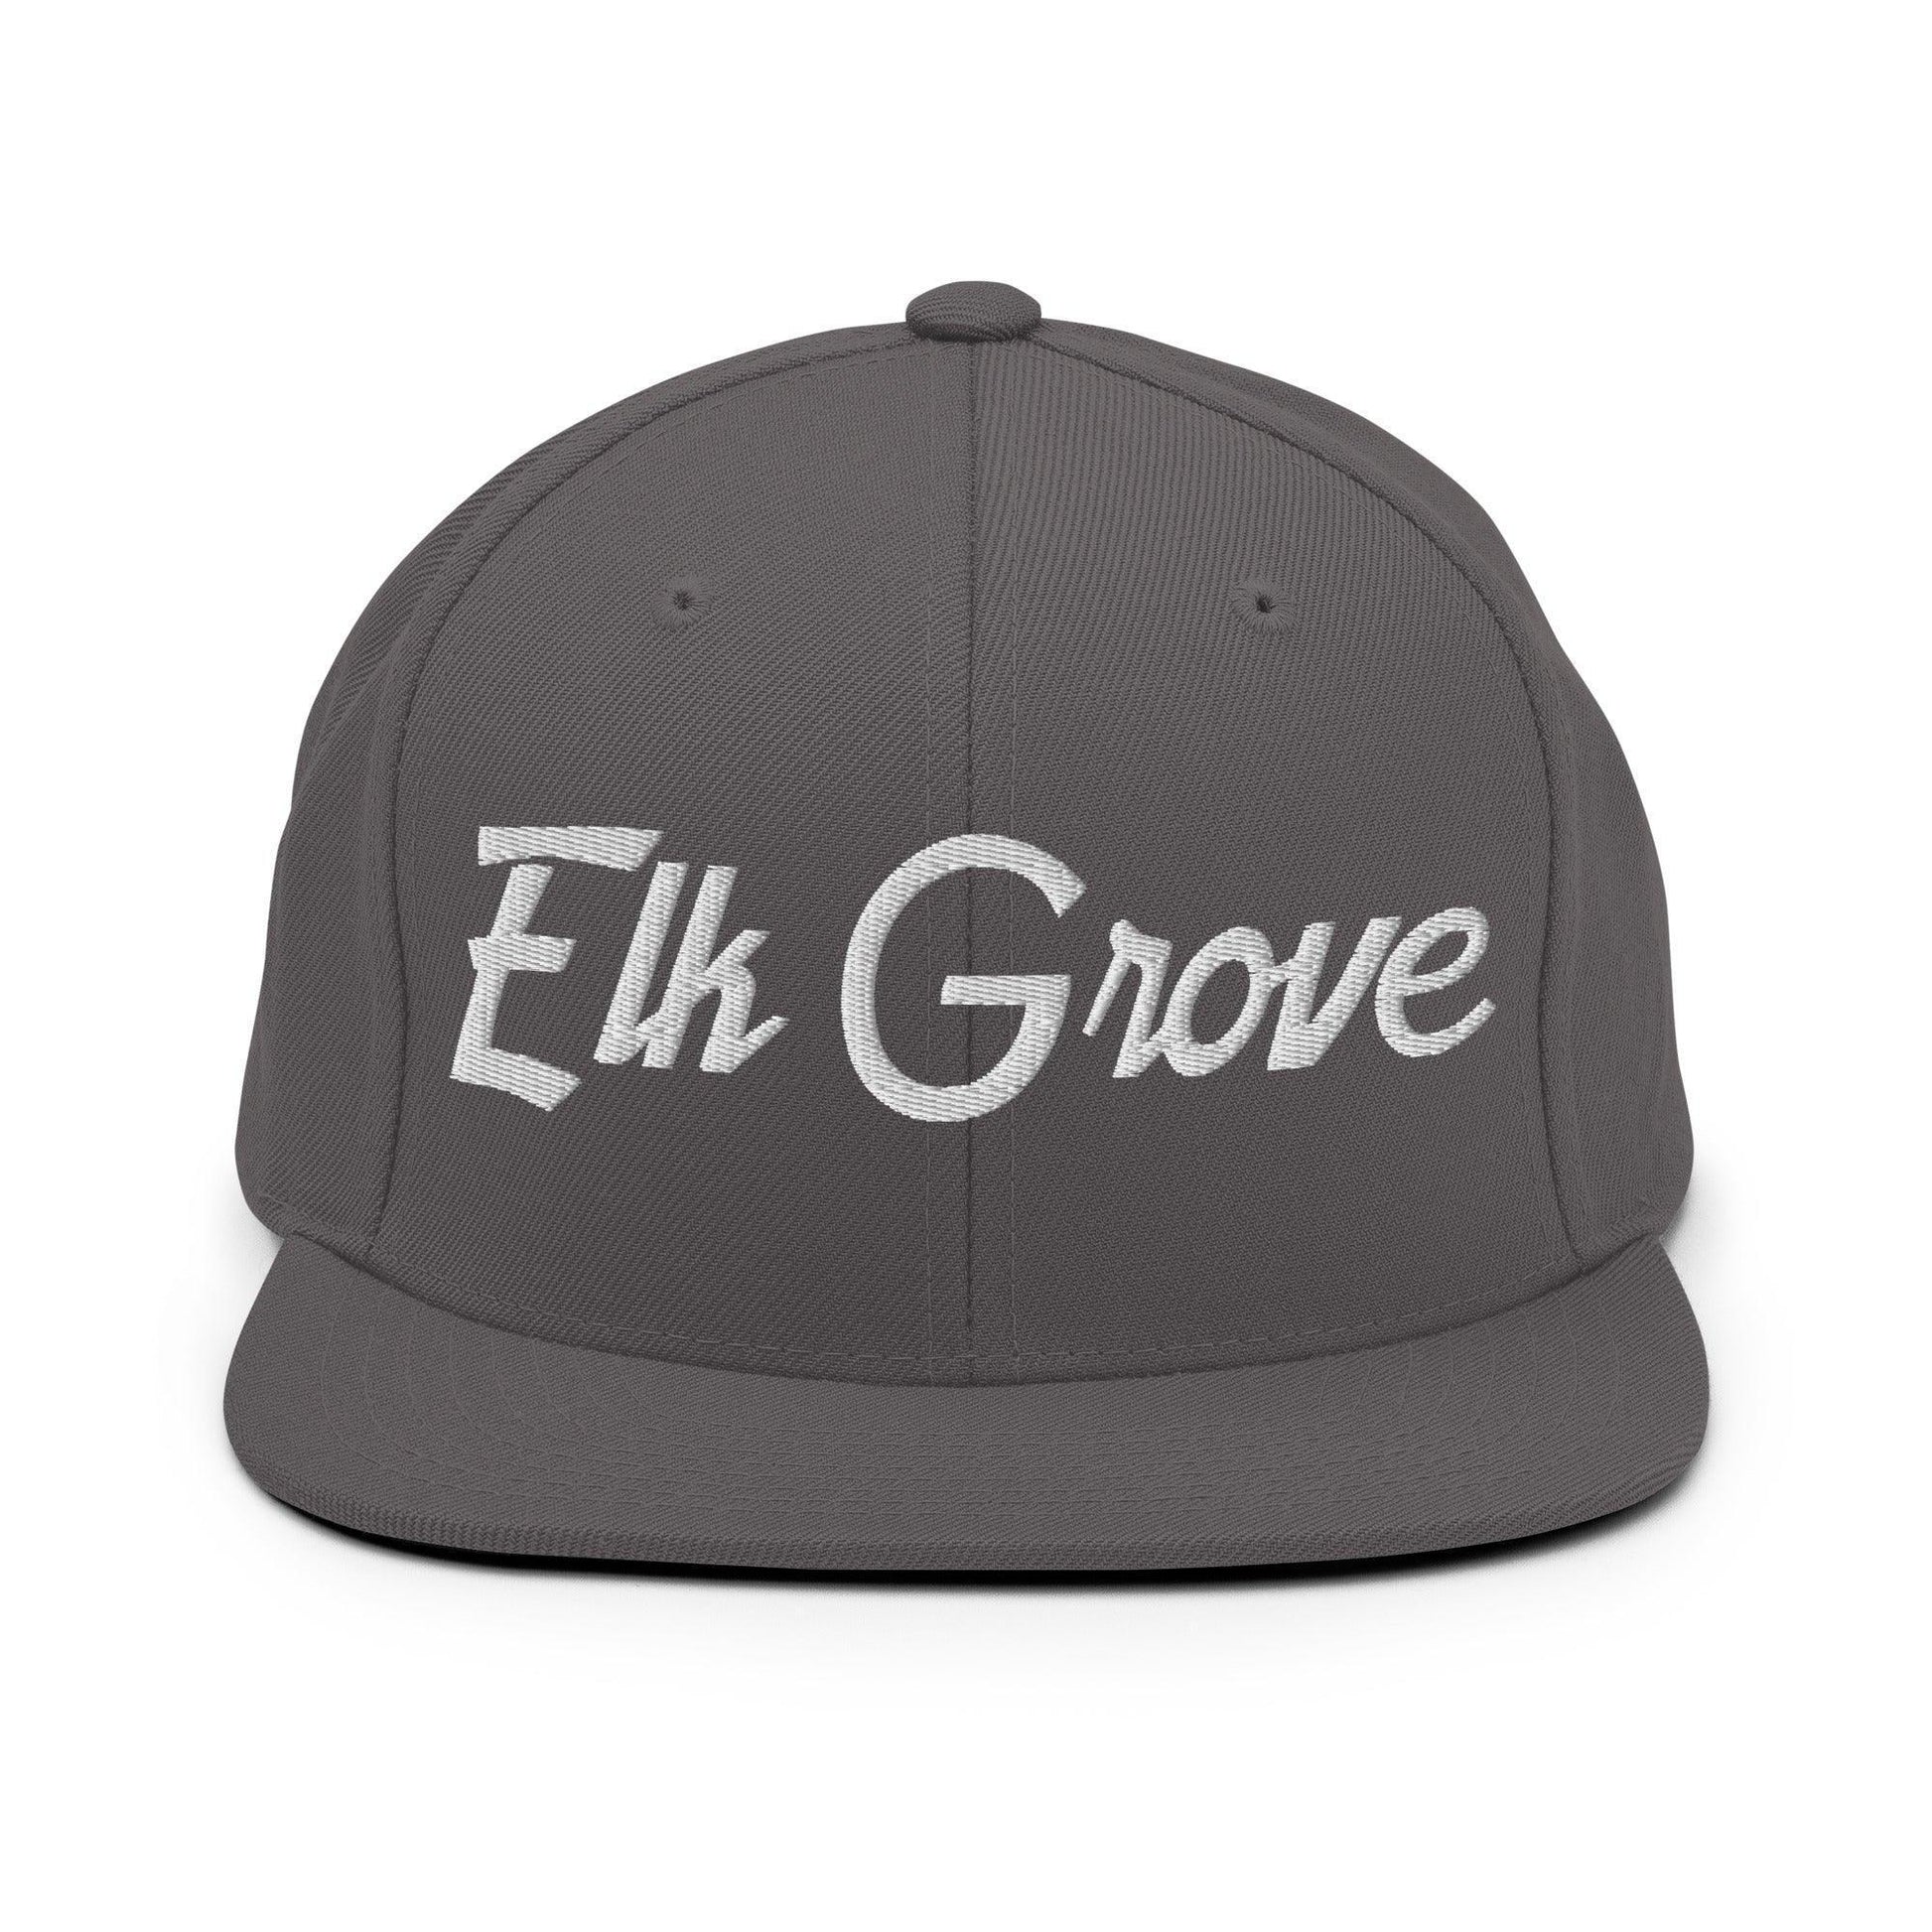 Elk Grove Script Snapback Hat Dark Grey